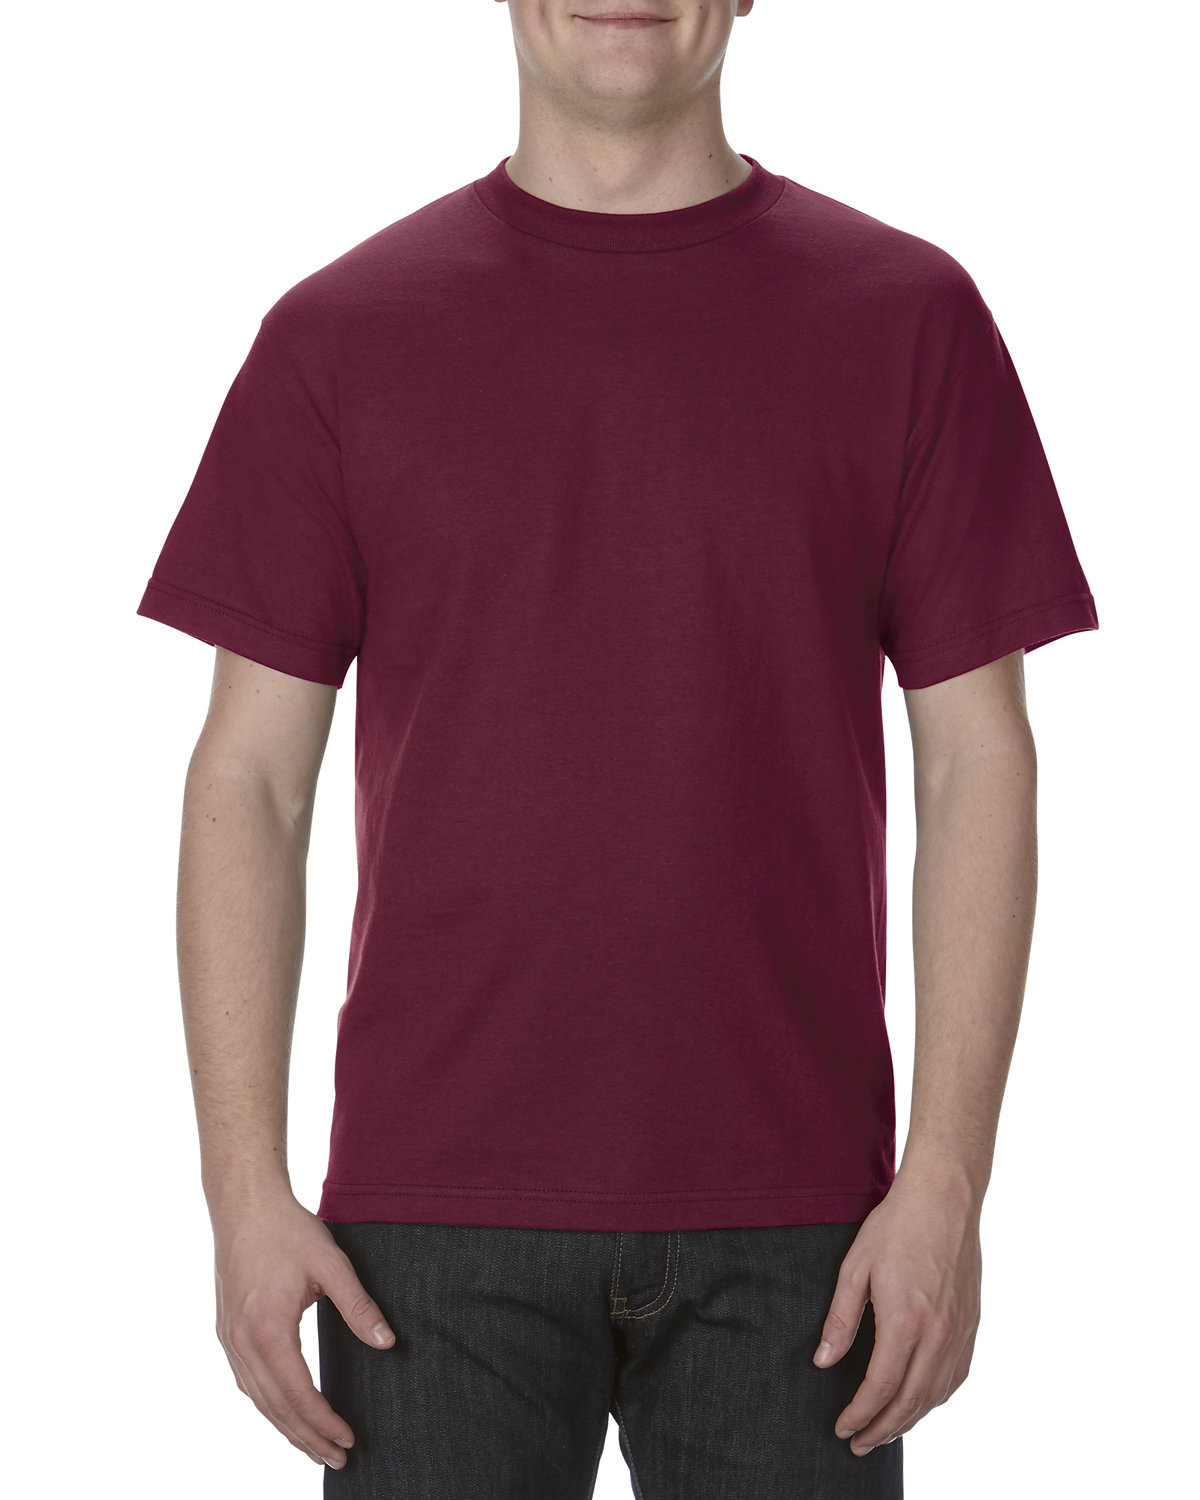 Alstyle Adult 6.0 oz., 100% Cotton T-Shirt BURGUNDY 